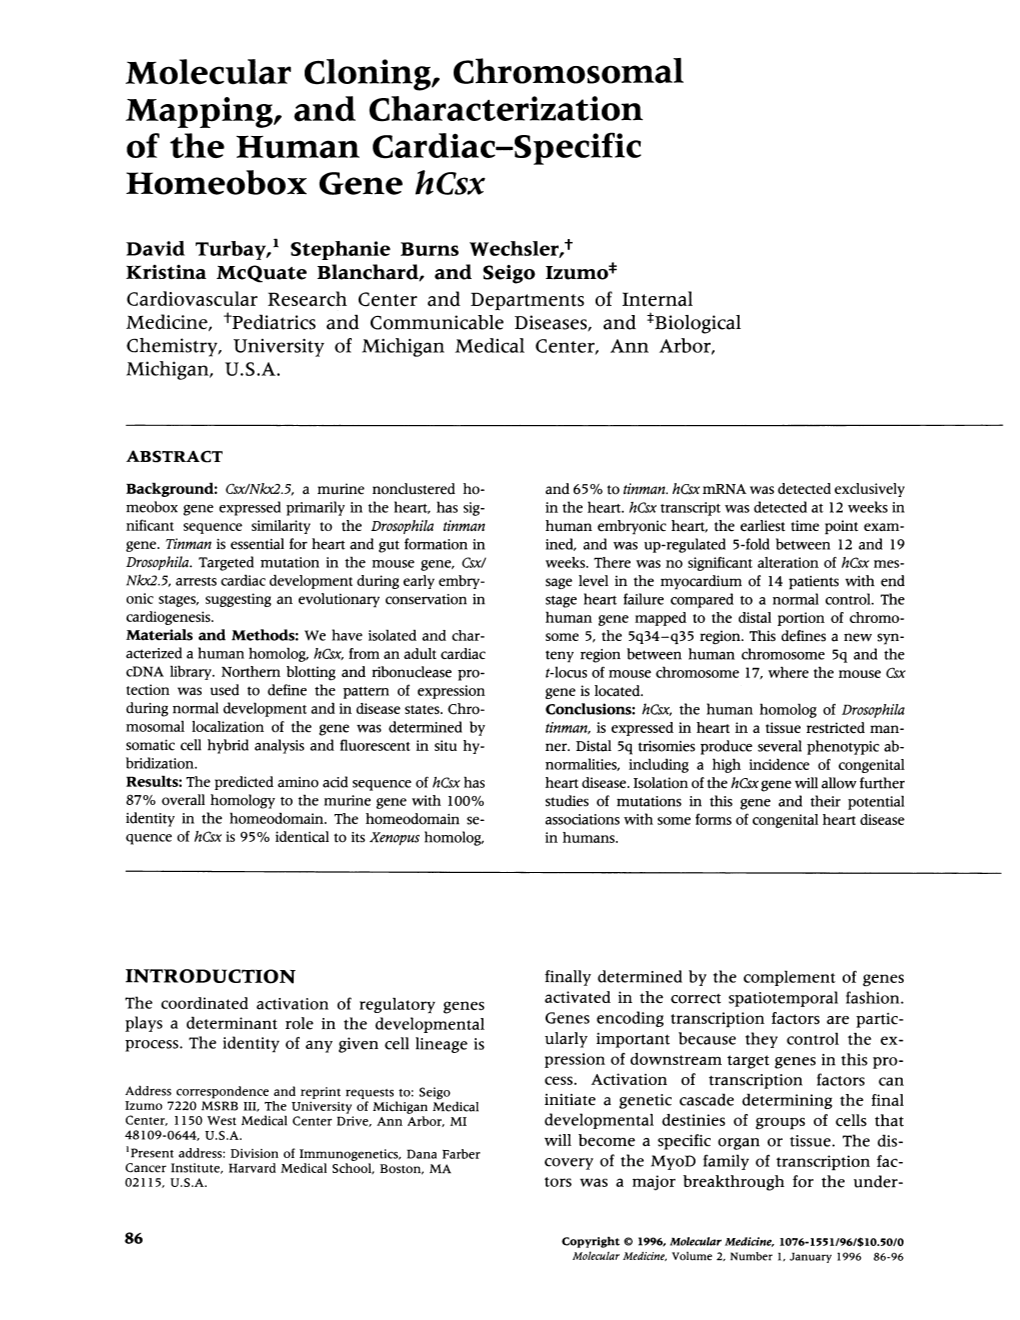 Molecular Cloning, Chromosomal Mapping, and Characterization of the Human Cardiac-Specific Homeobox Gene Hcsx